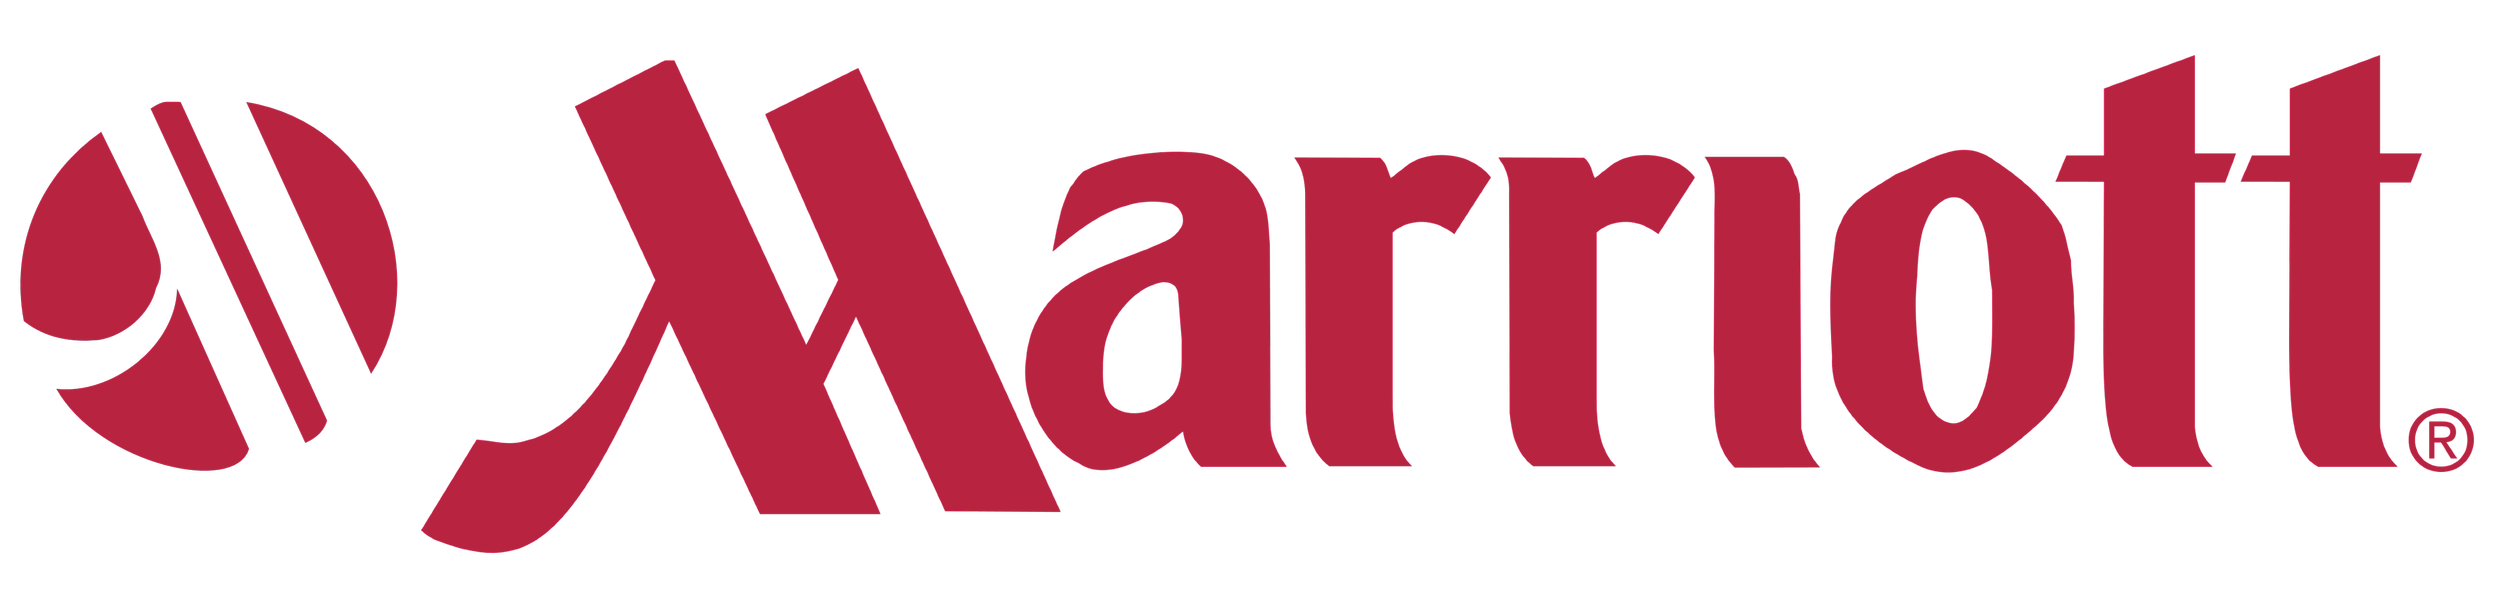 Marriott_logo_horizontal.png